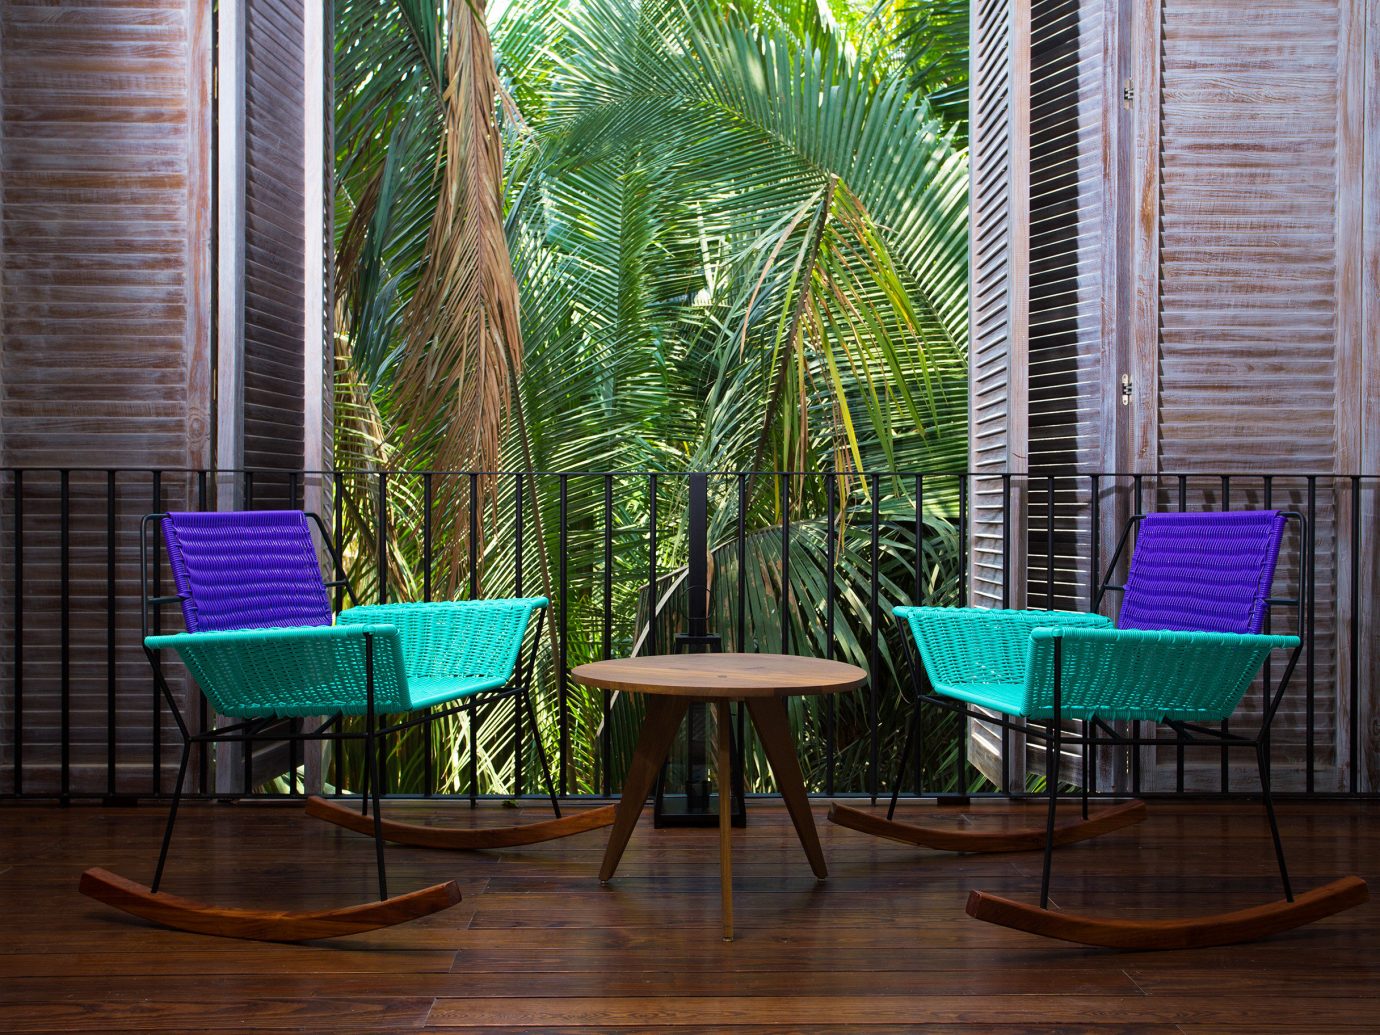 Influencers + Tastemakers Travel Shop Trip Ideas floor chair leisure indoor window room furniture wood interior design table Design backyard outdoor structure area